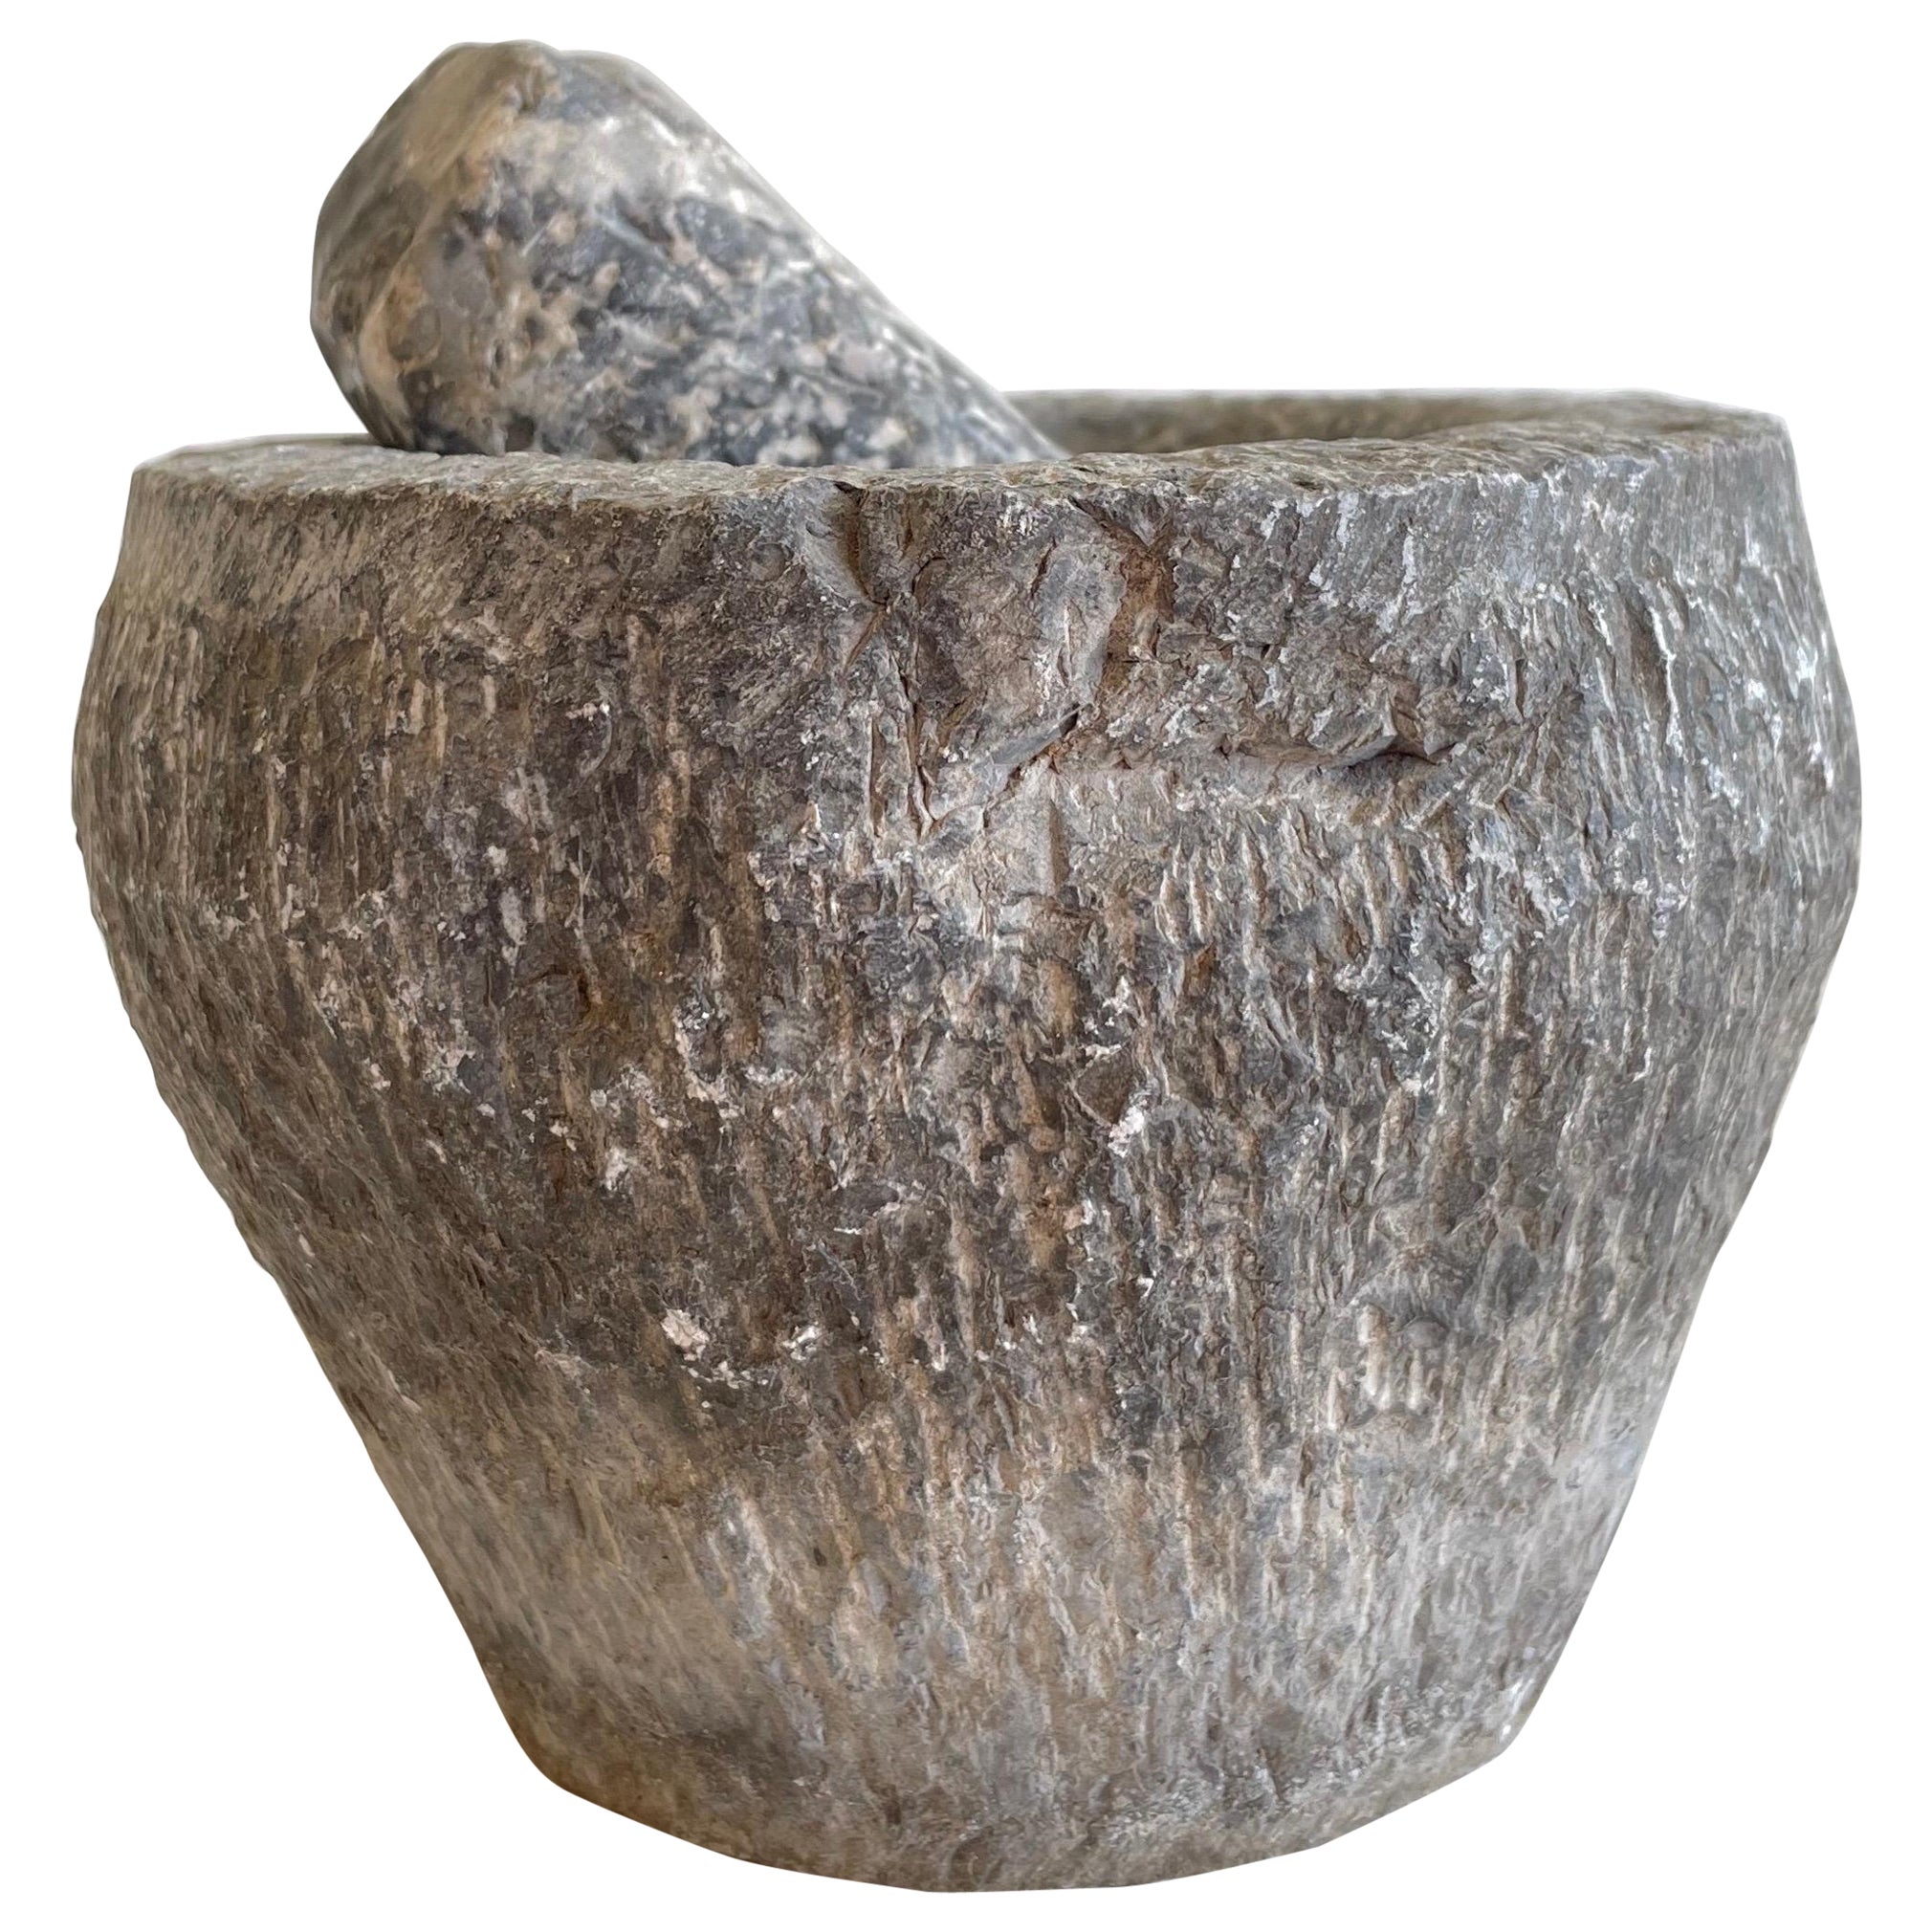 Antique Stone Mortar and Pestle Bowl Set